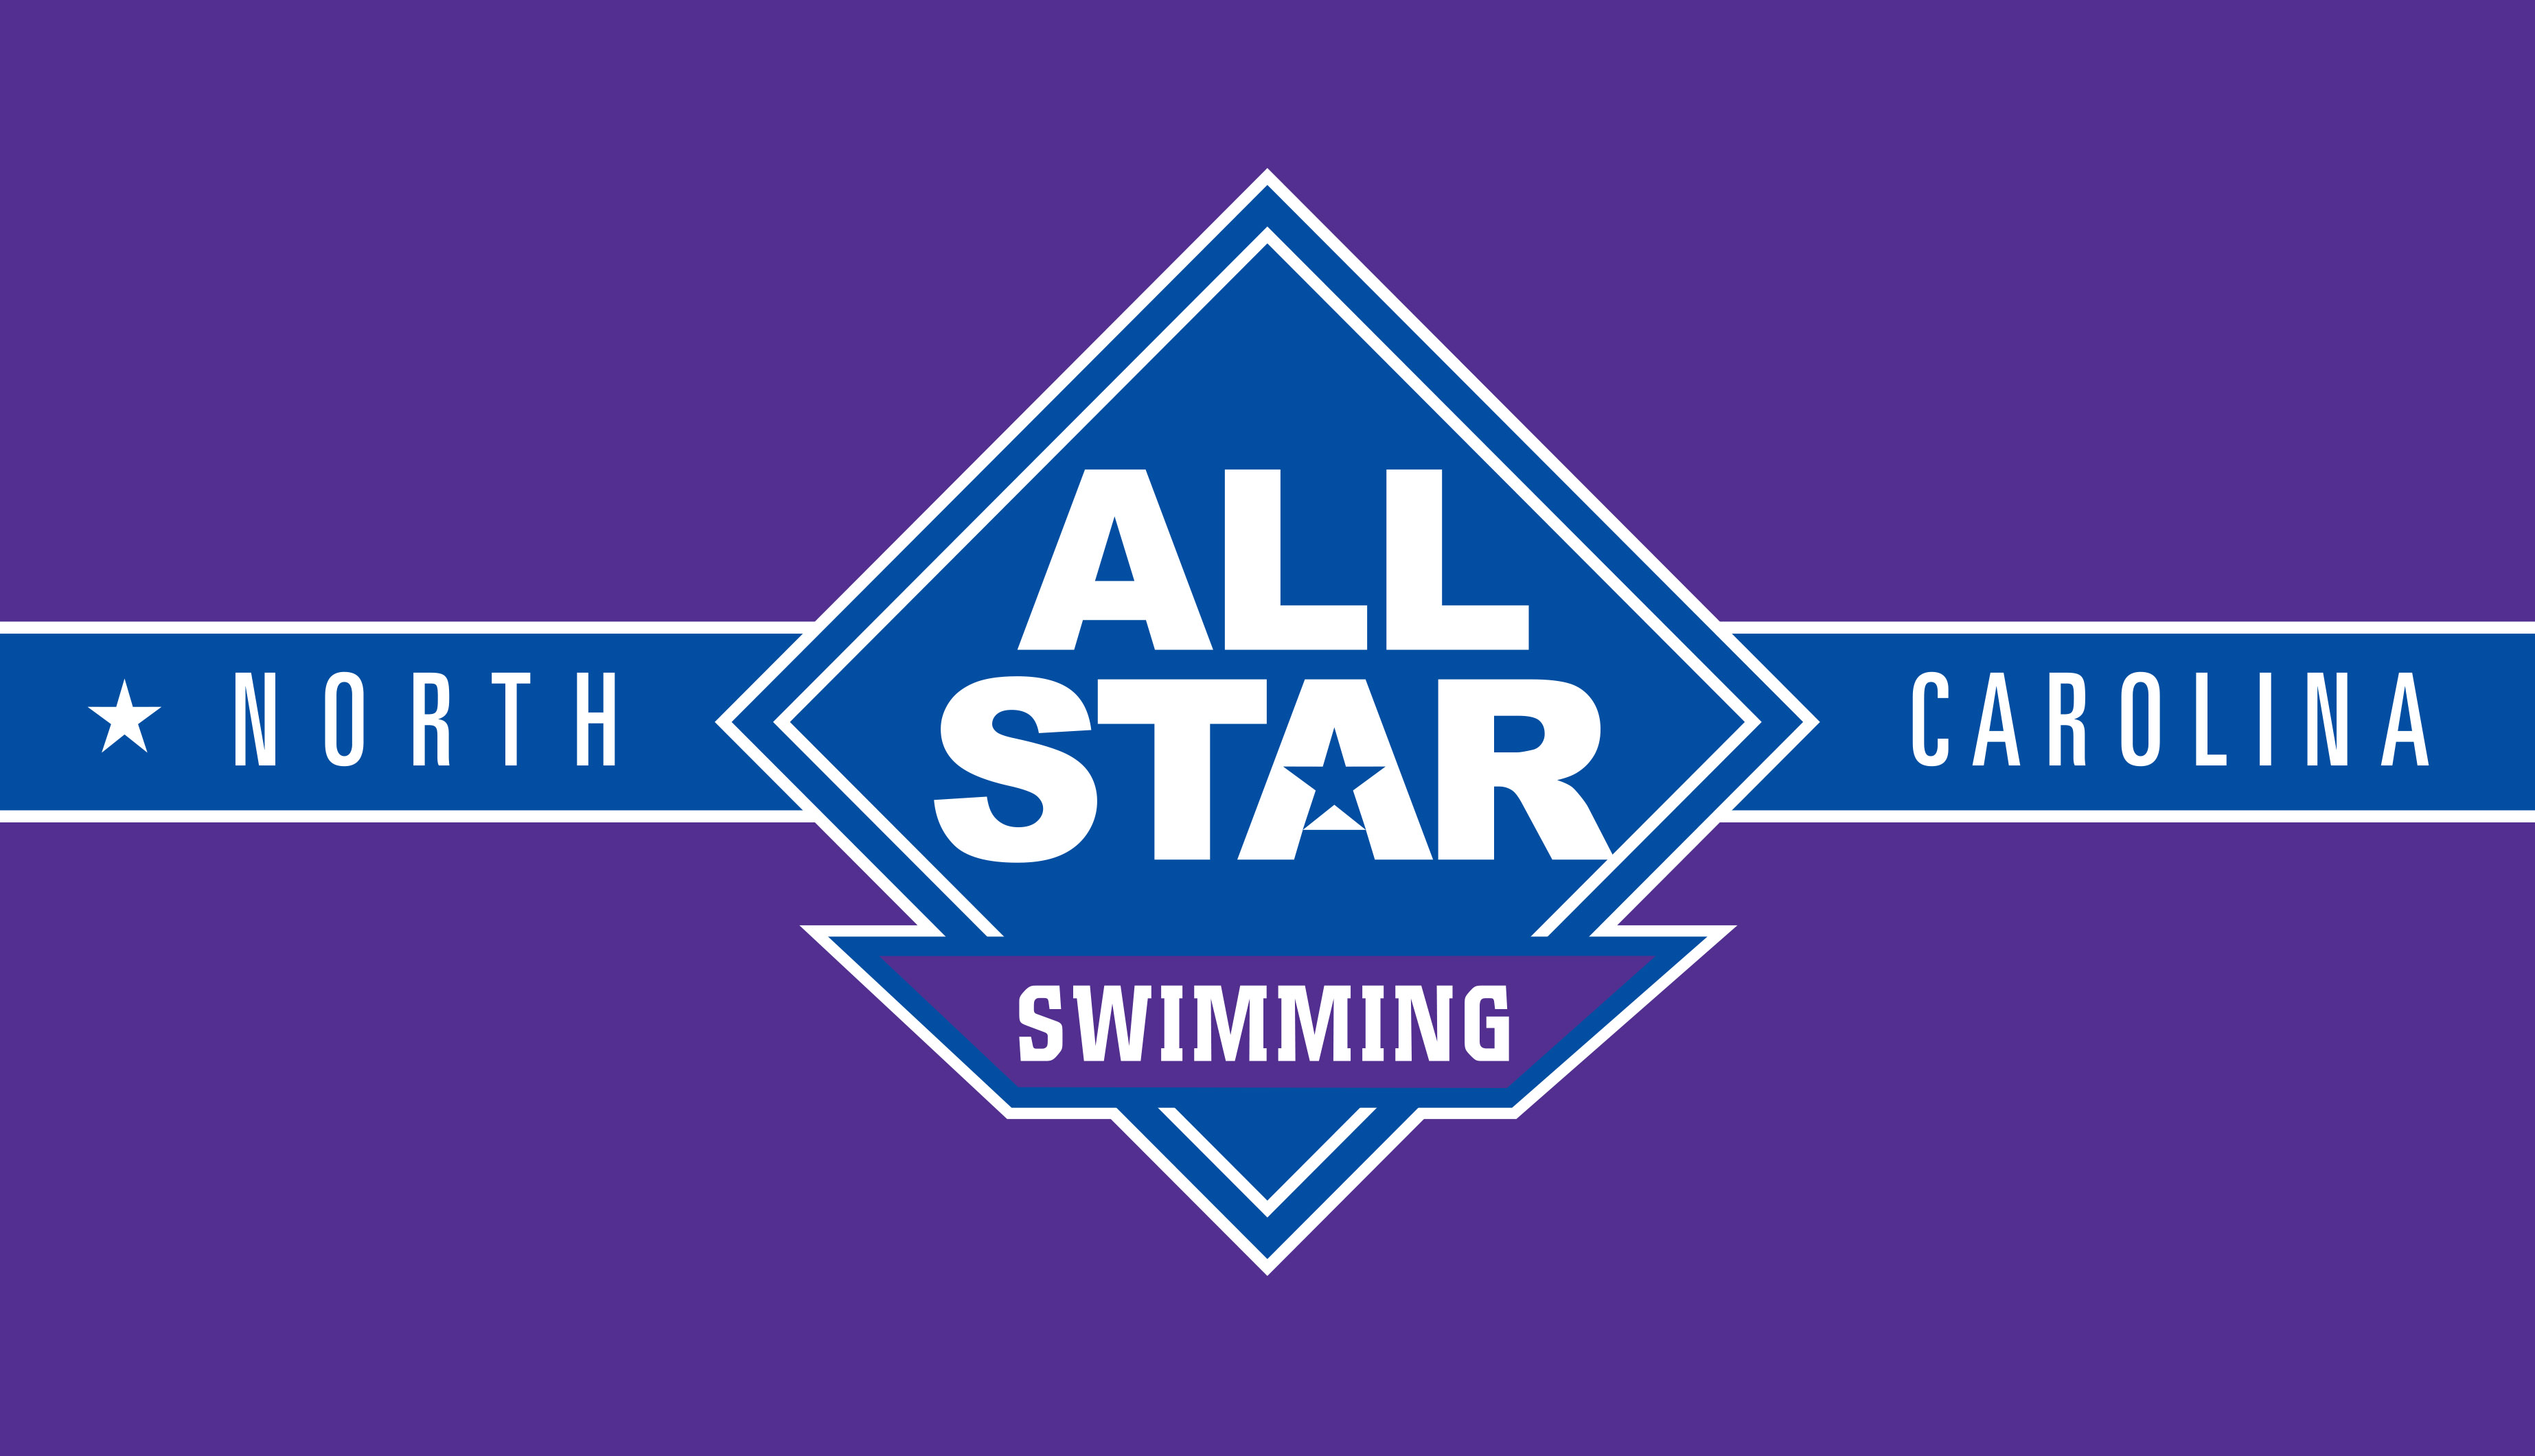 00273_NC-Swimming-All-Stars_34x60_V2-PROOF